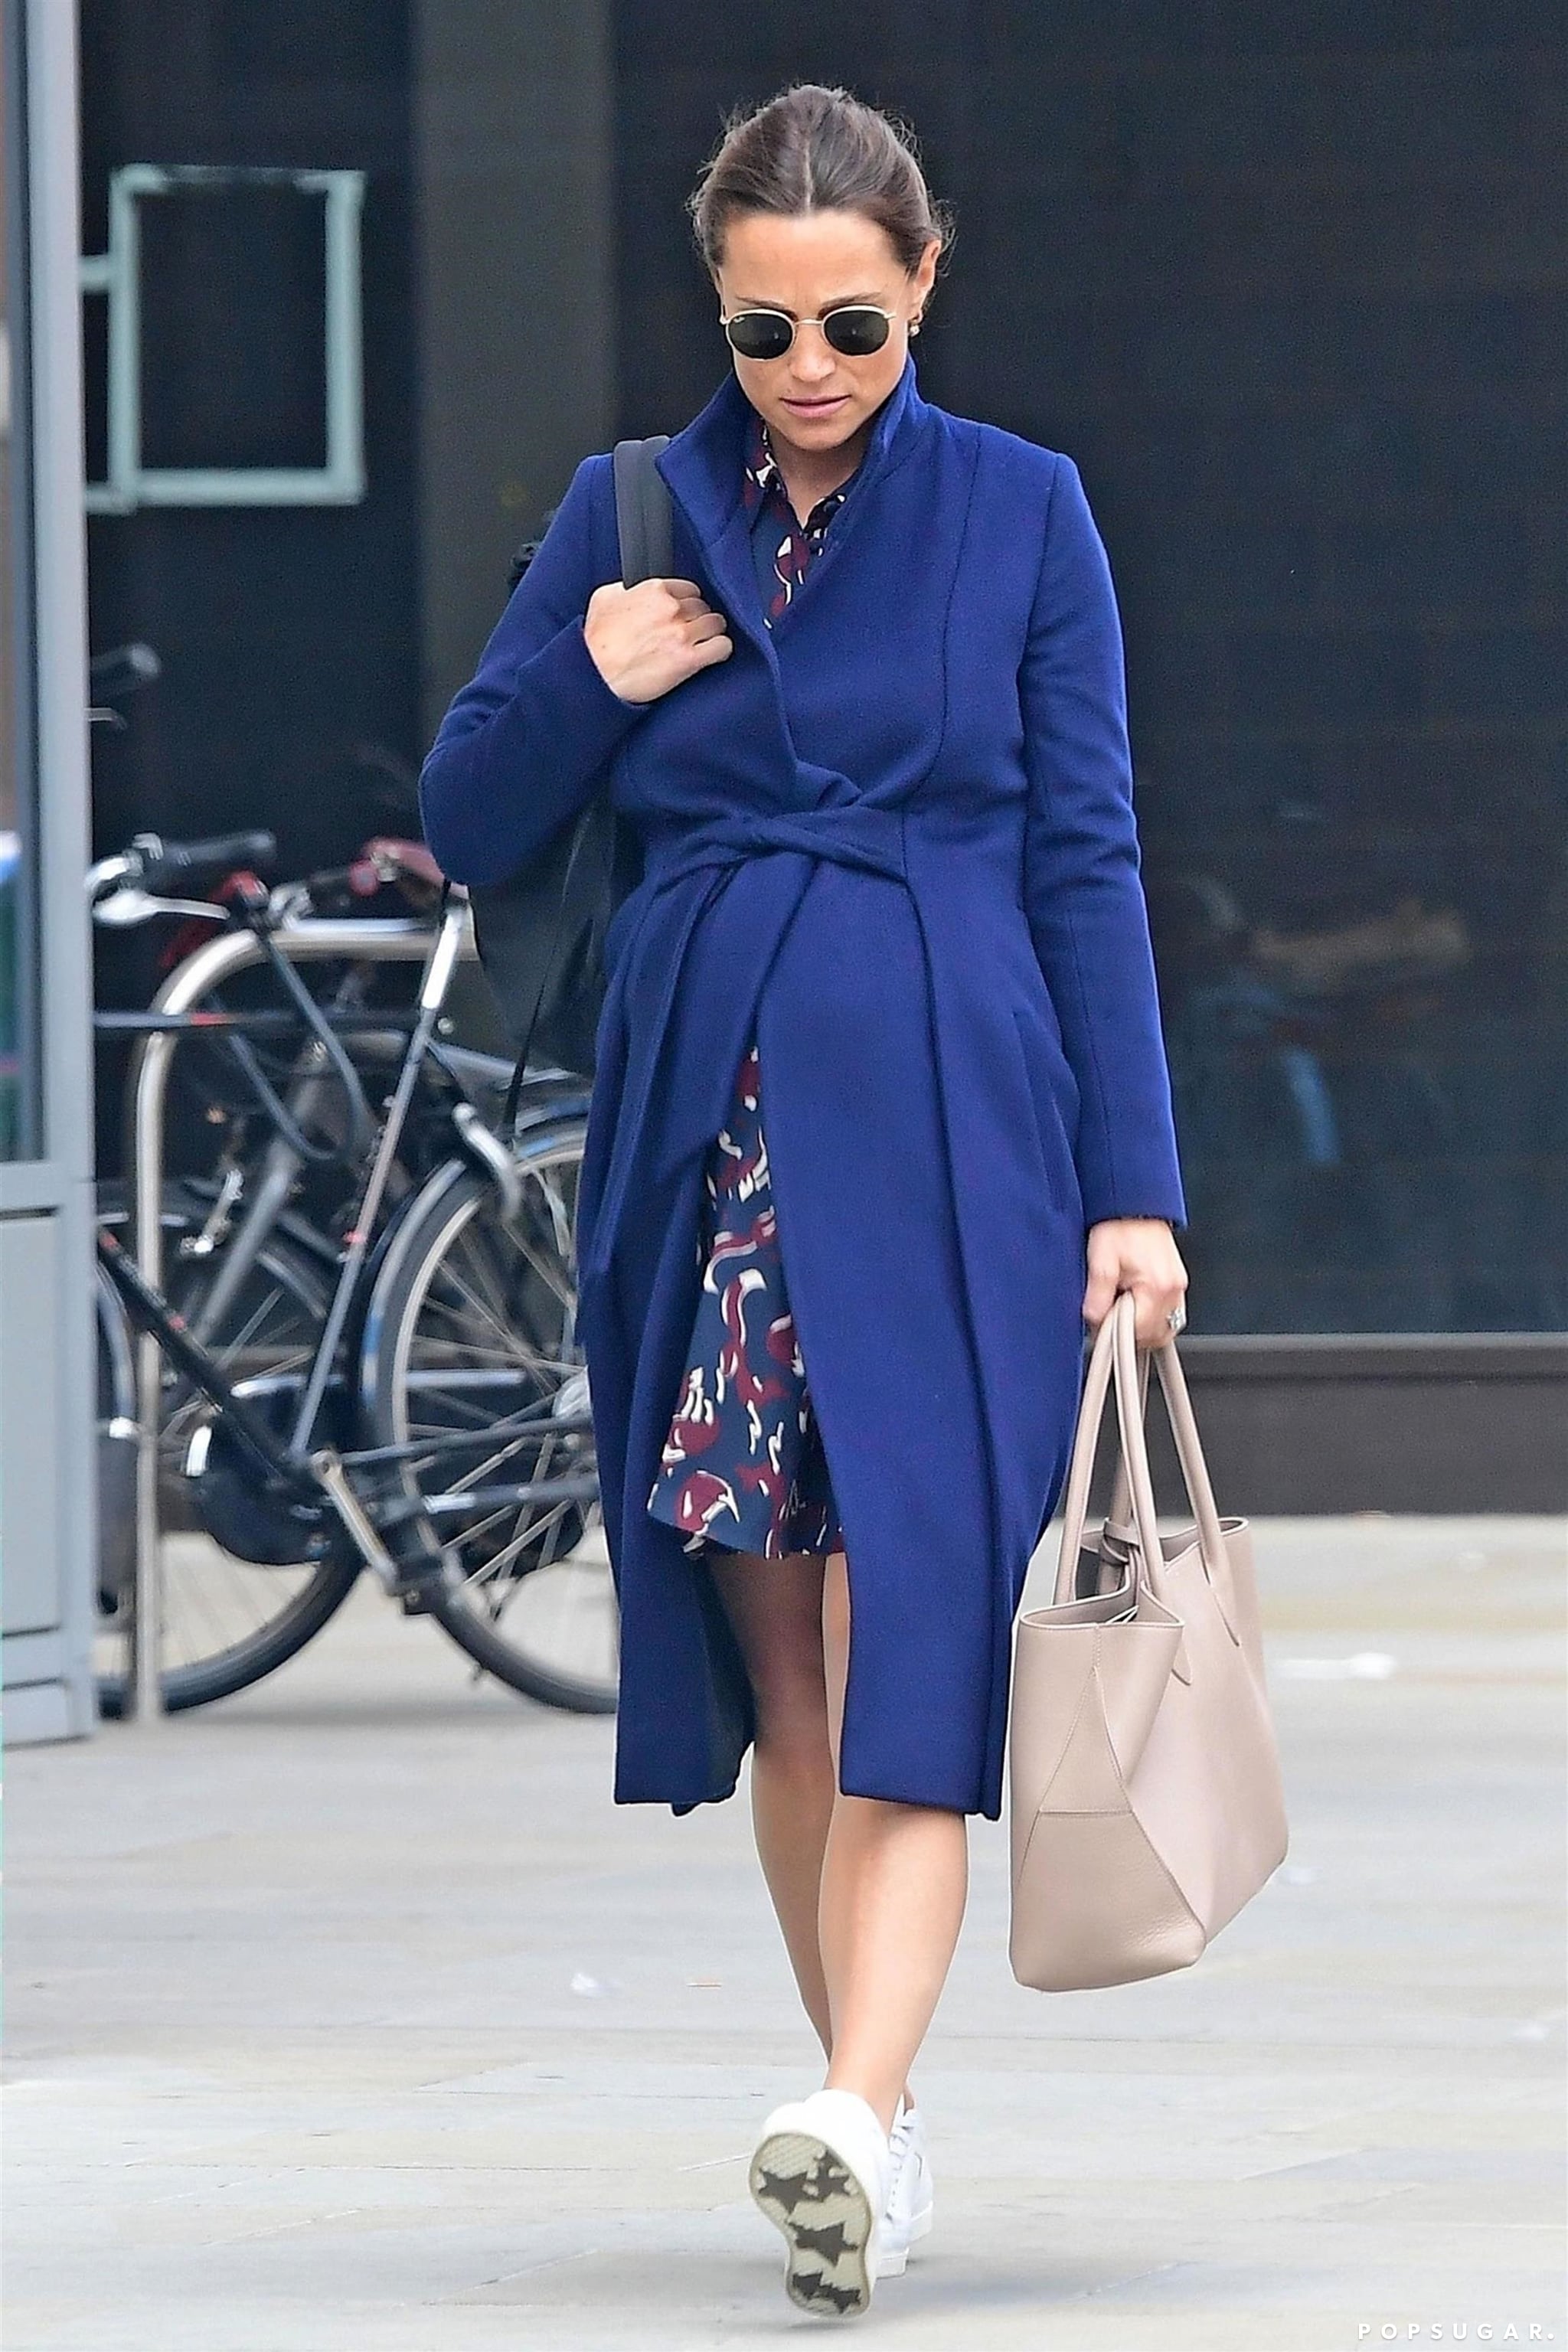 Pippa Middleton in Kate Spade Dress With Fox Print | POPSUGAR Fashion UK